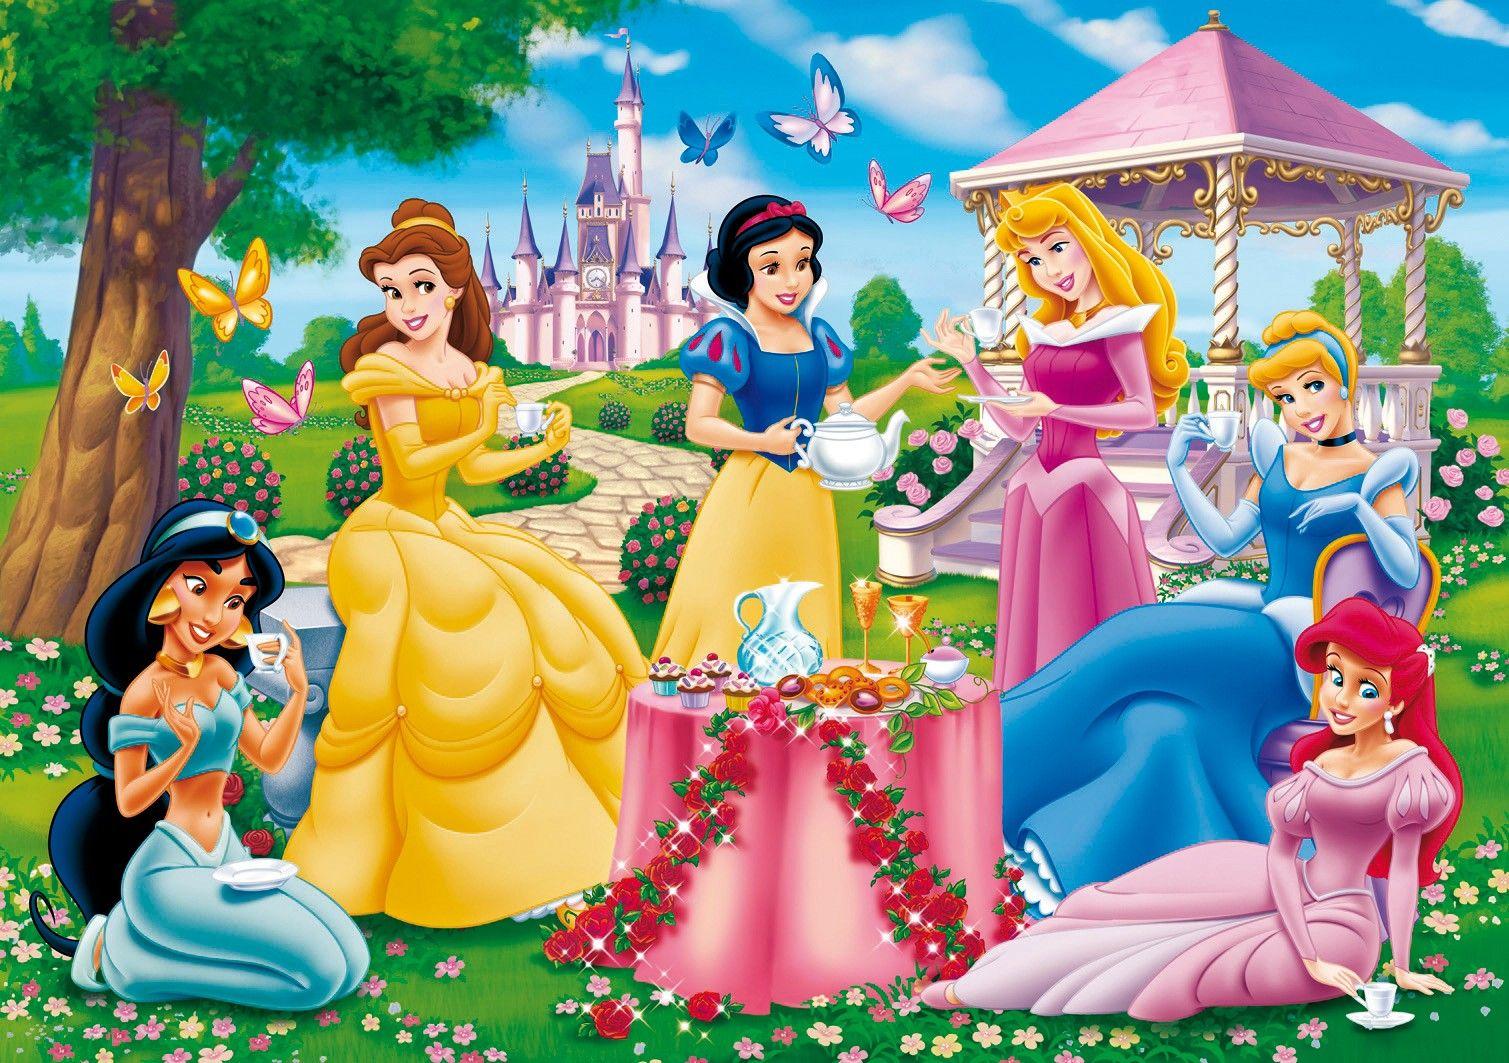 Disney Princess background picture, Disney Princess background wallpaper